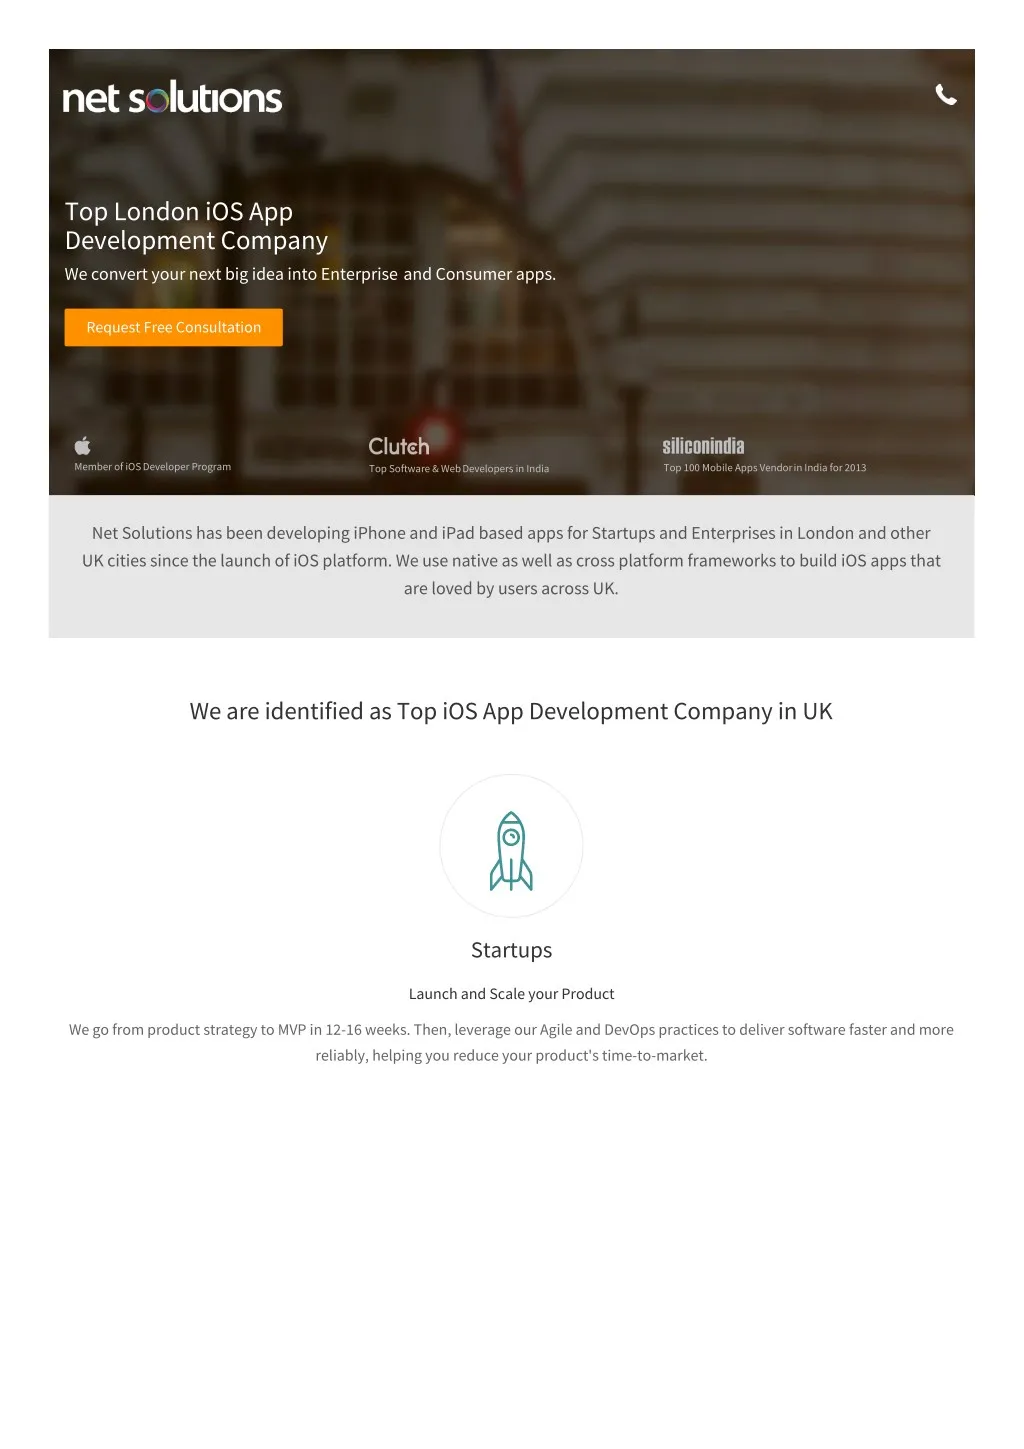 top london ios app development company we convert